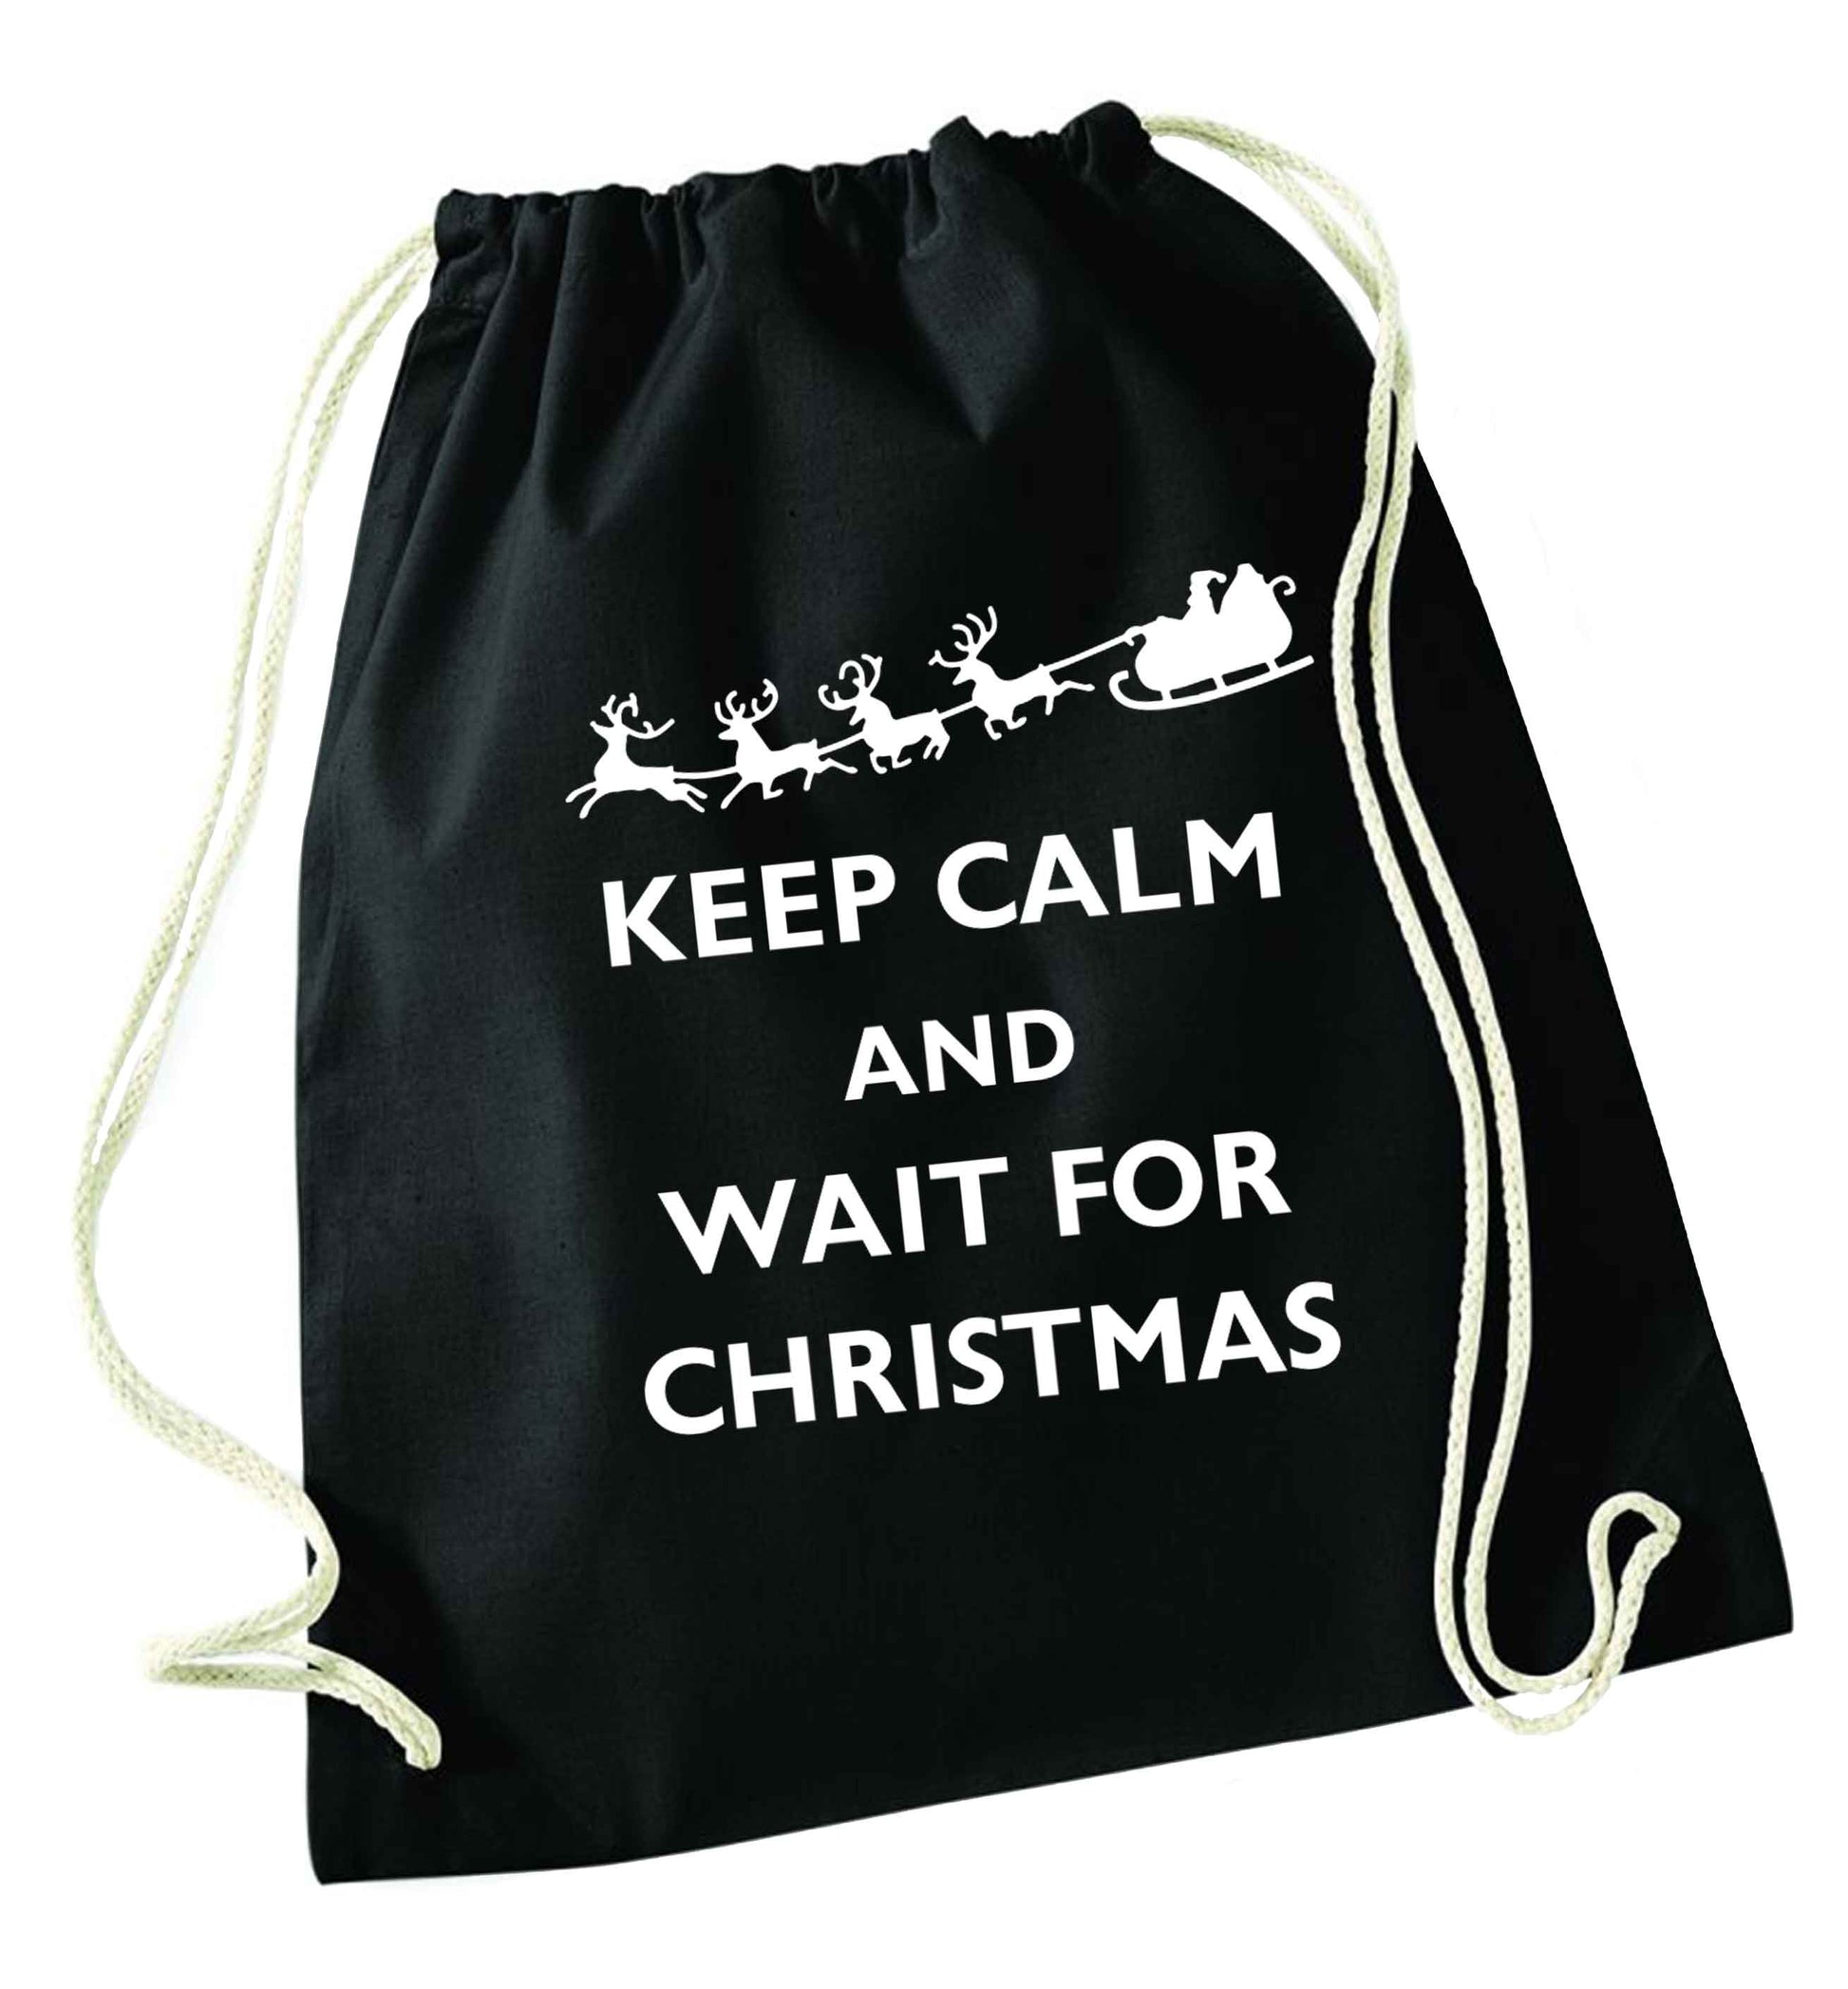 Keep calm and wait for Christmas black drawstring bag